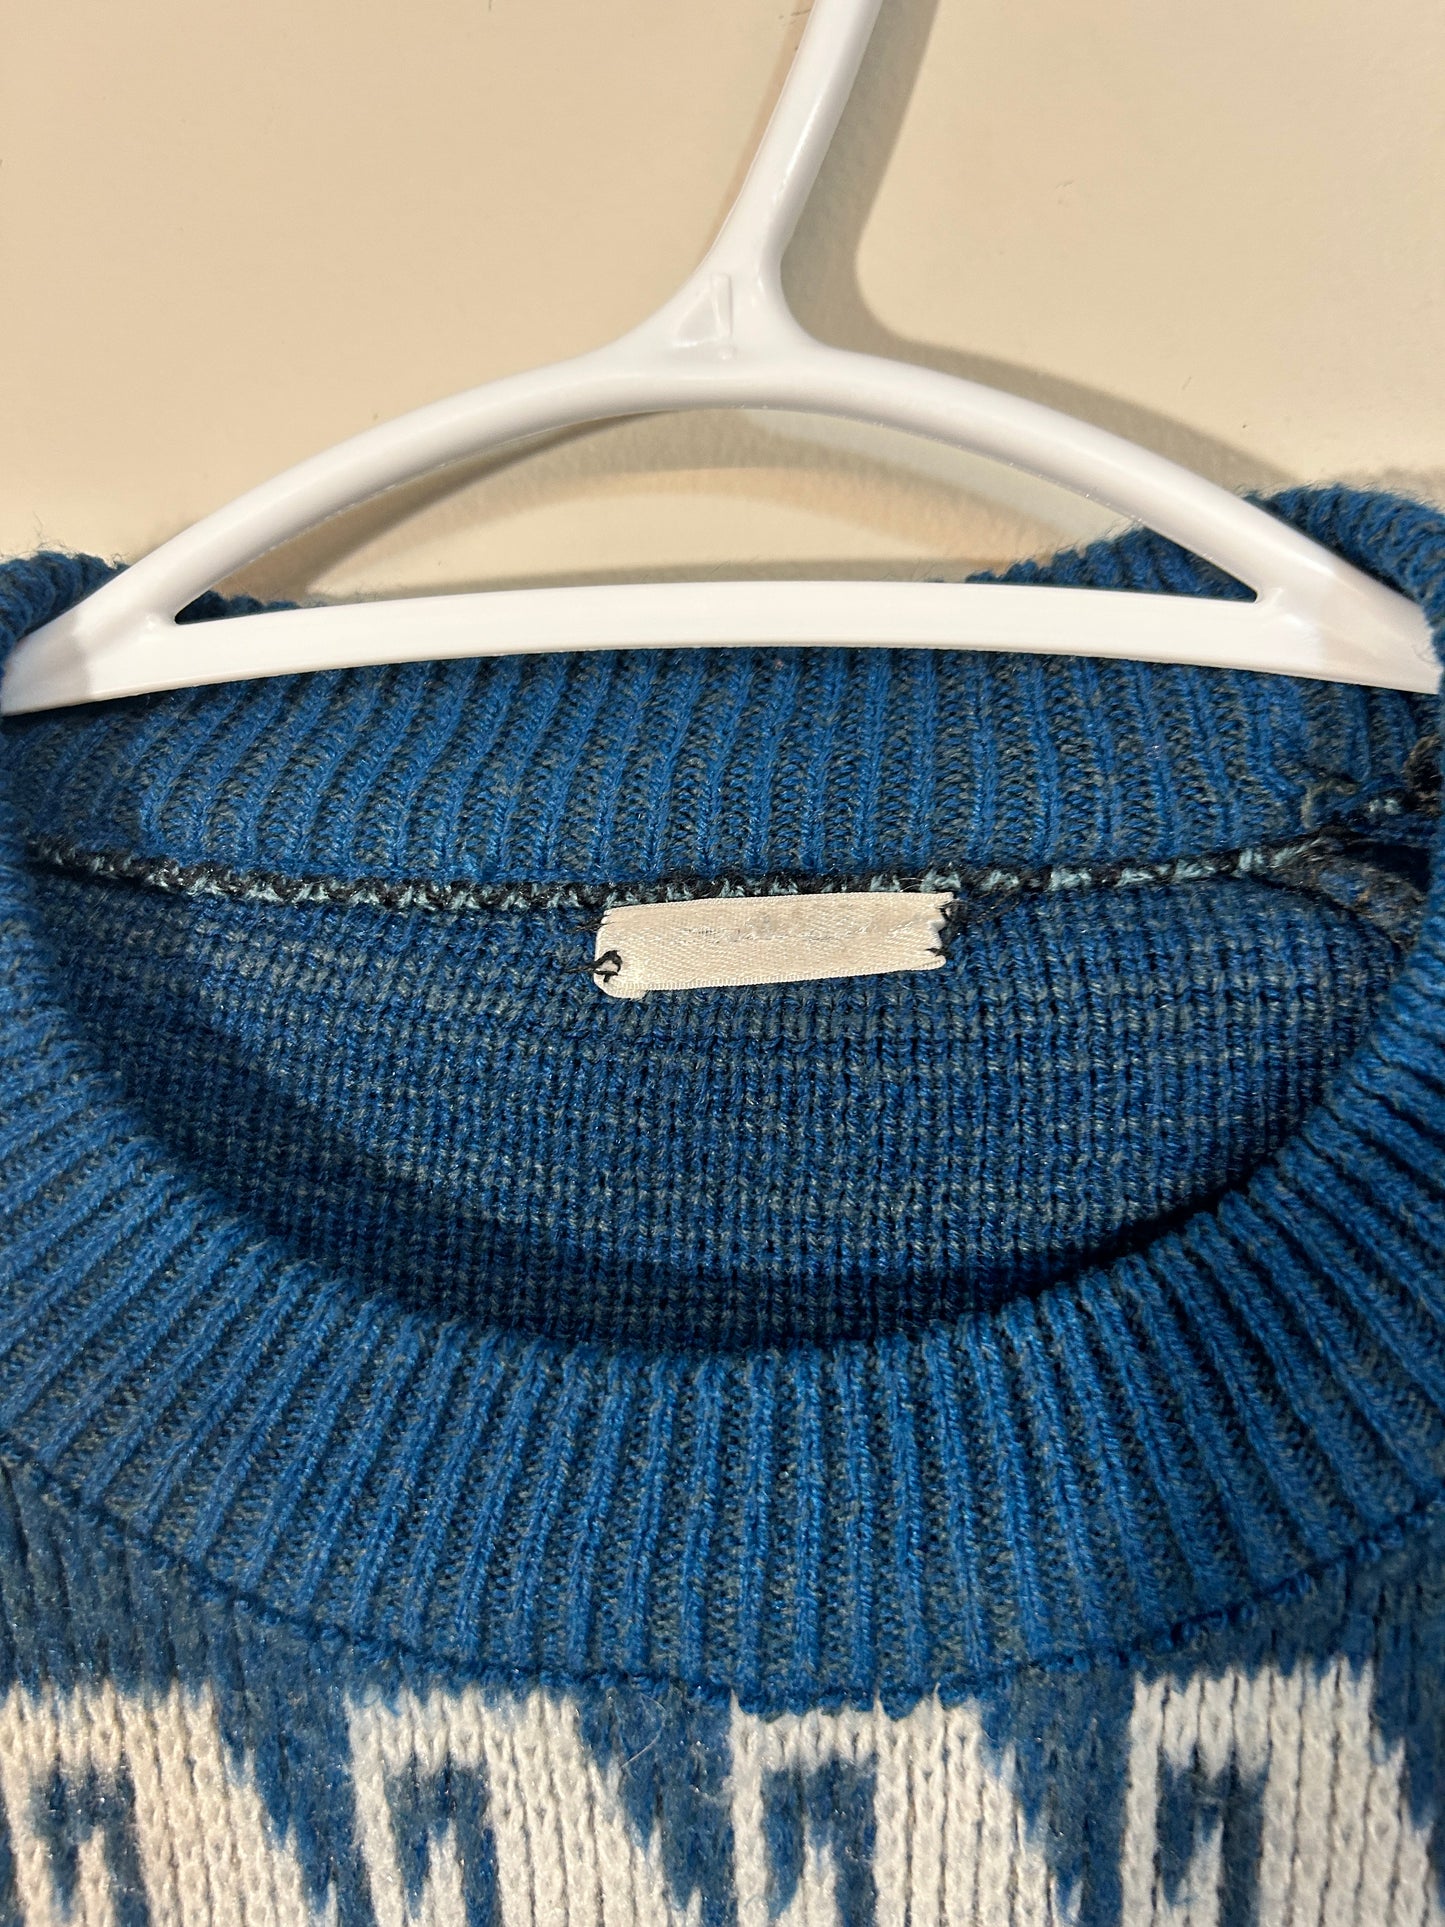 Vintage Llama Knit Sweater (L)